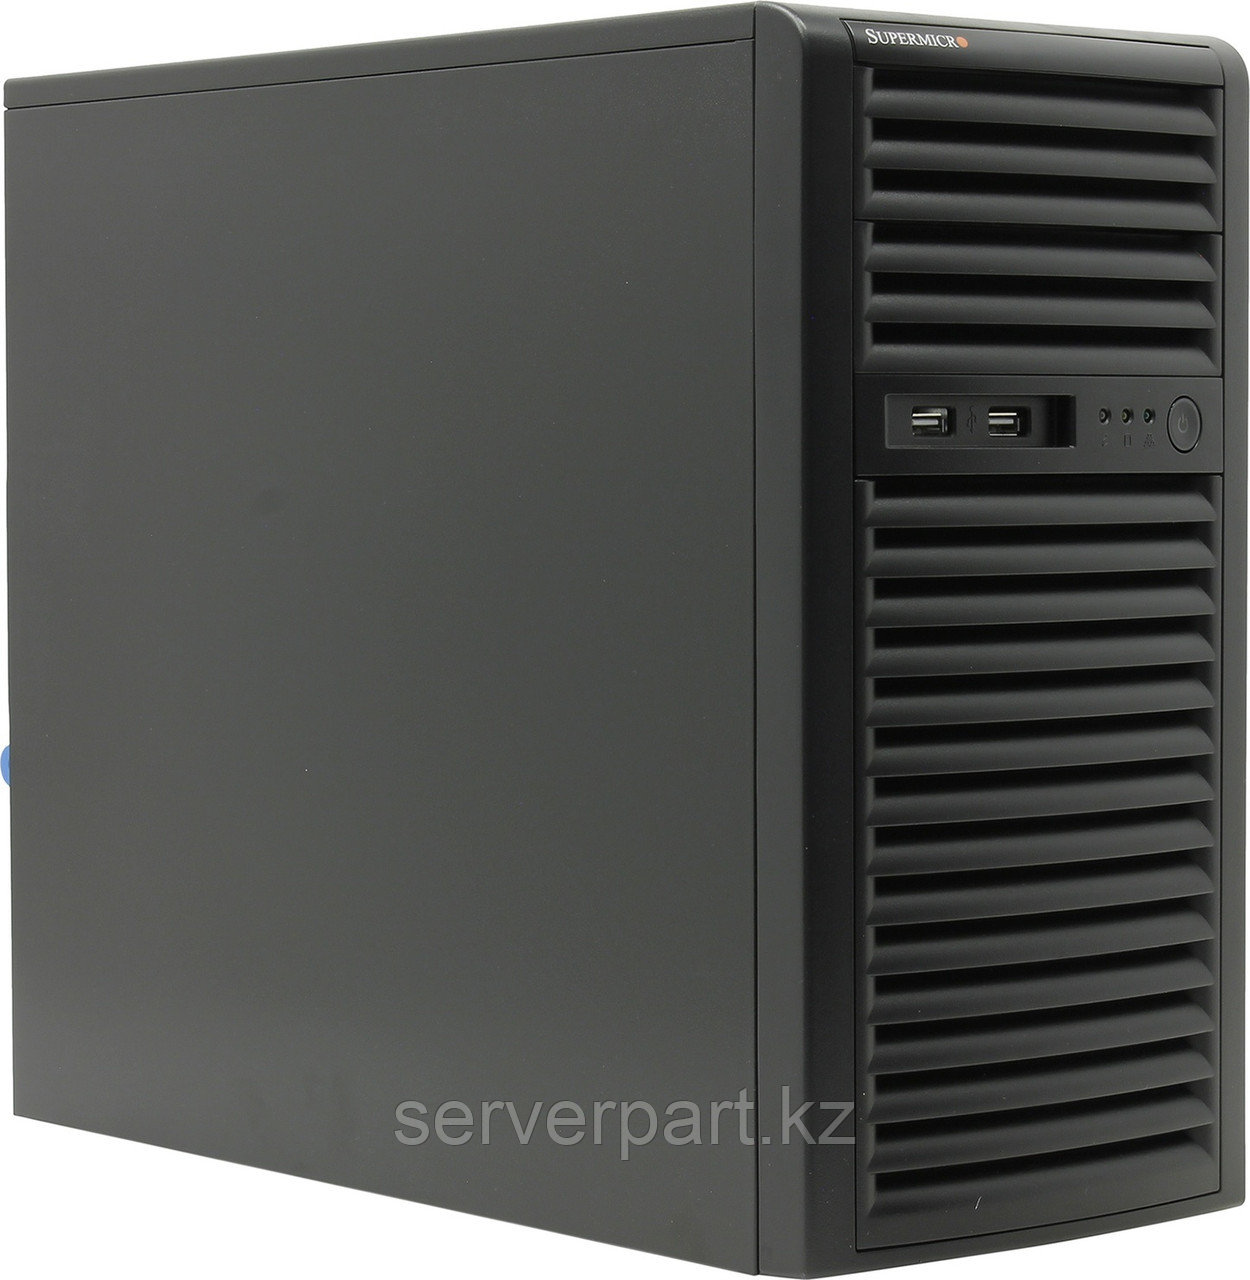 Сервер Supermicro 5039D Tower/4-core intel xeon E3-1220v6 3GHz/48GB UDIMM nECC/1x240GB SSD RI Hyb